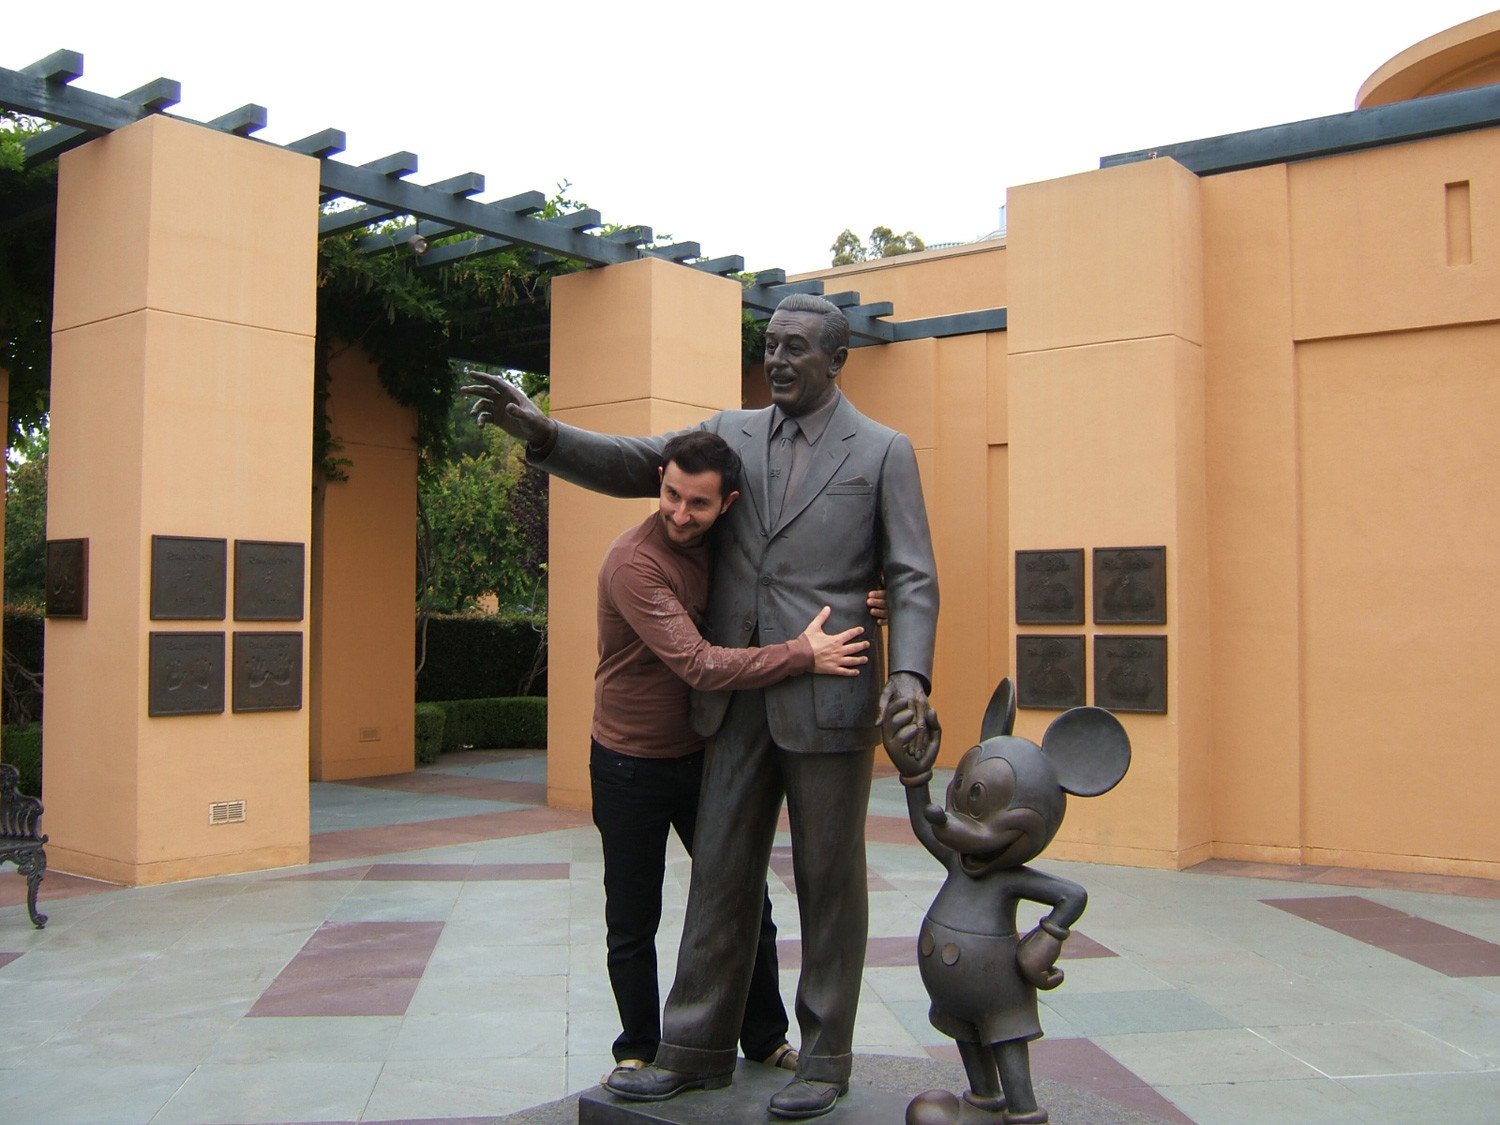 At the Disney studios in Los Angeles, California